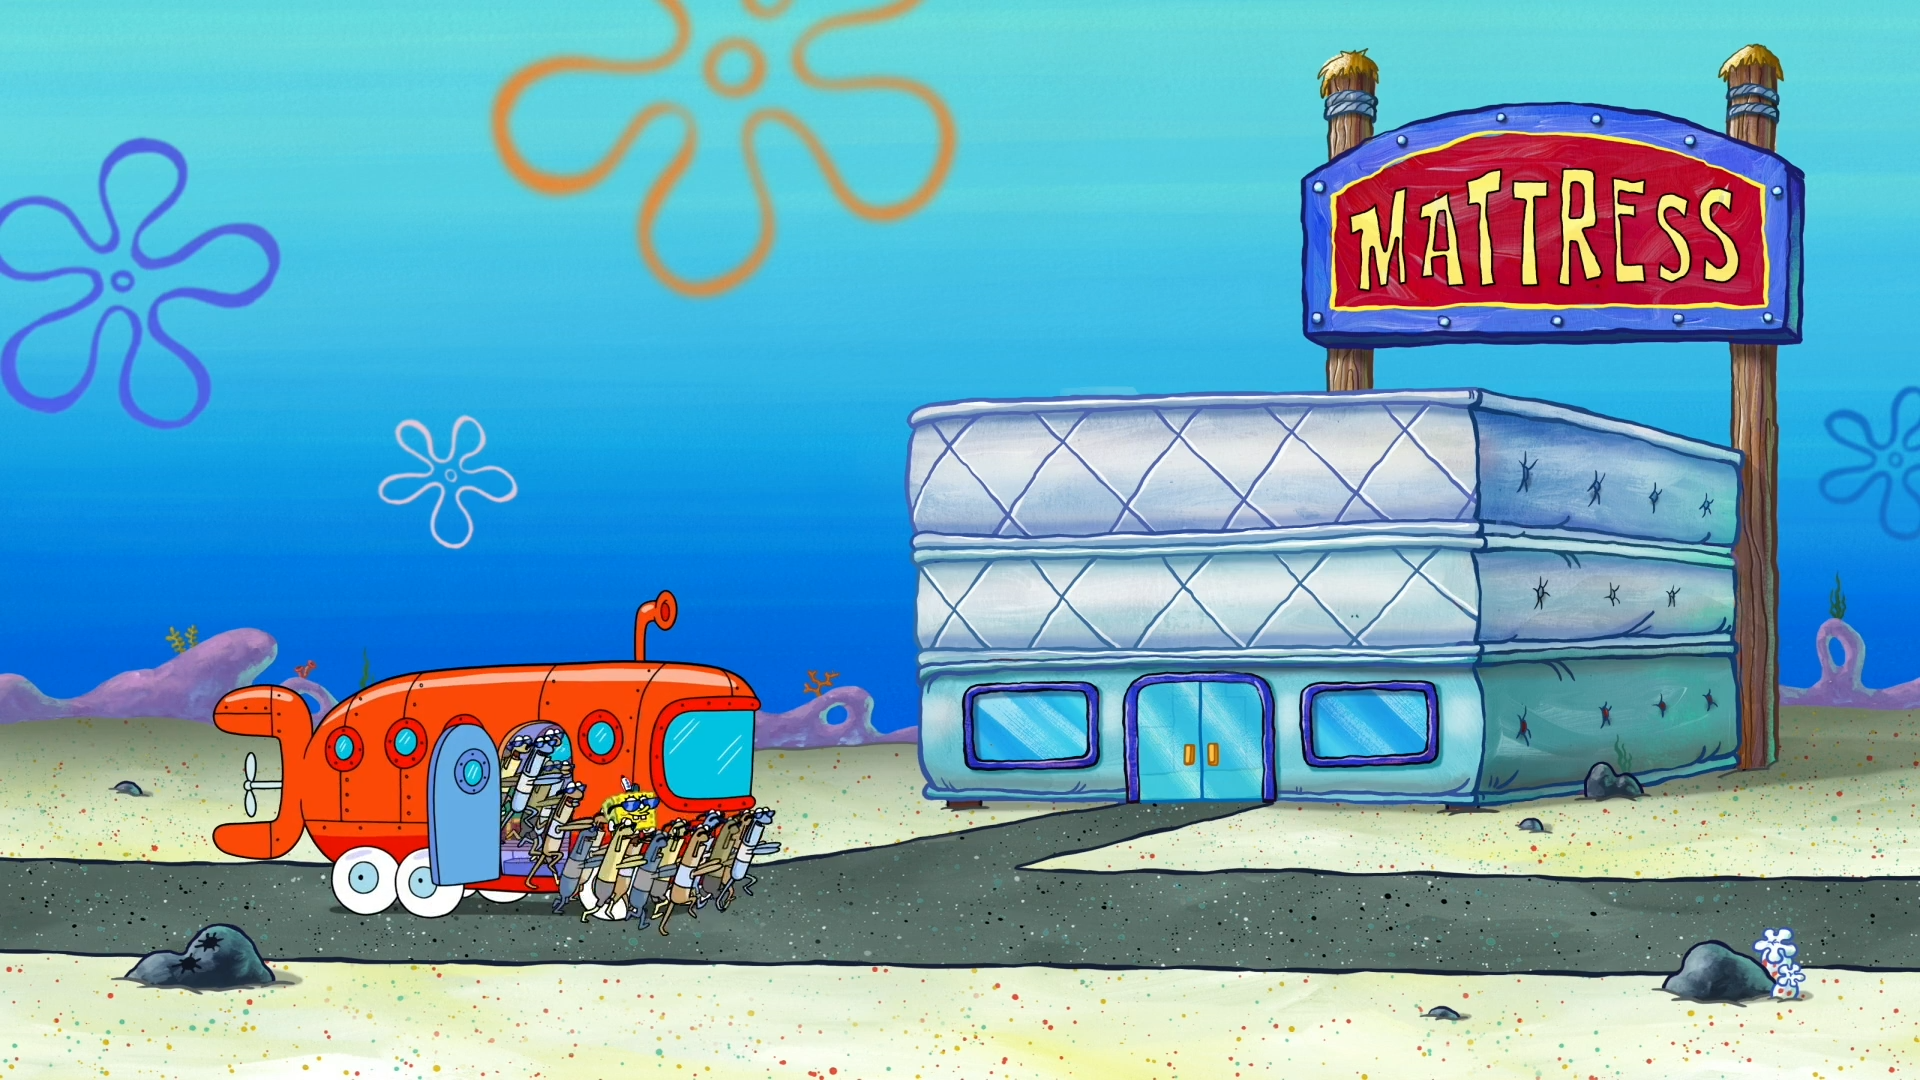 Mattress (location), Encyclopedia SpongeBobia